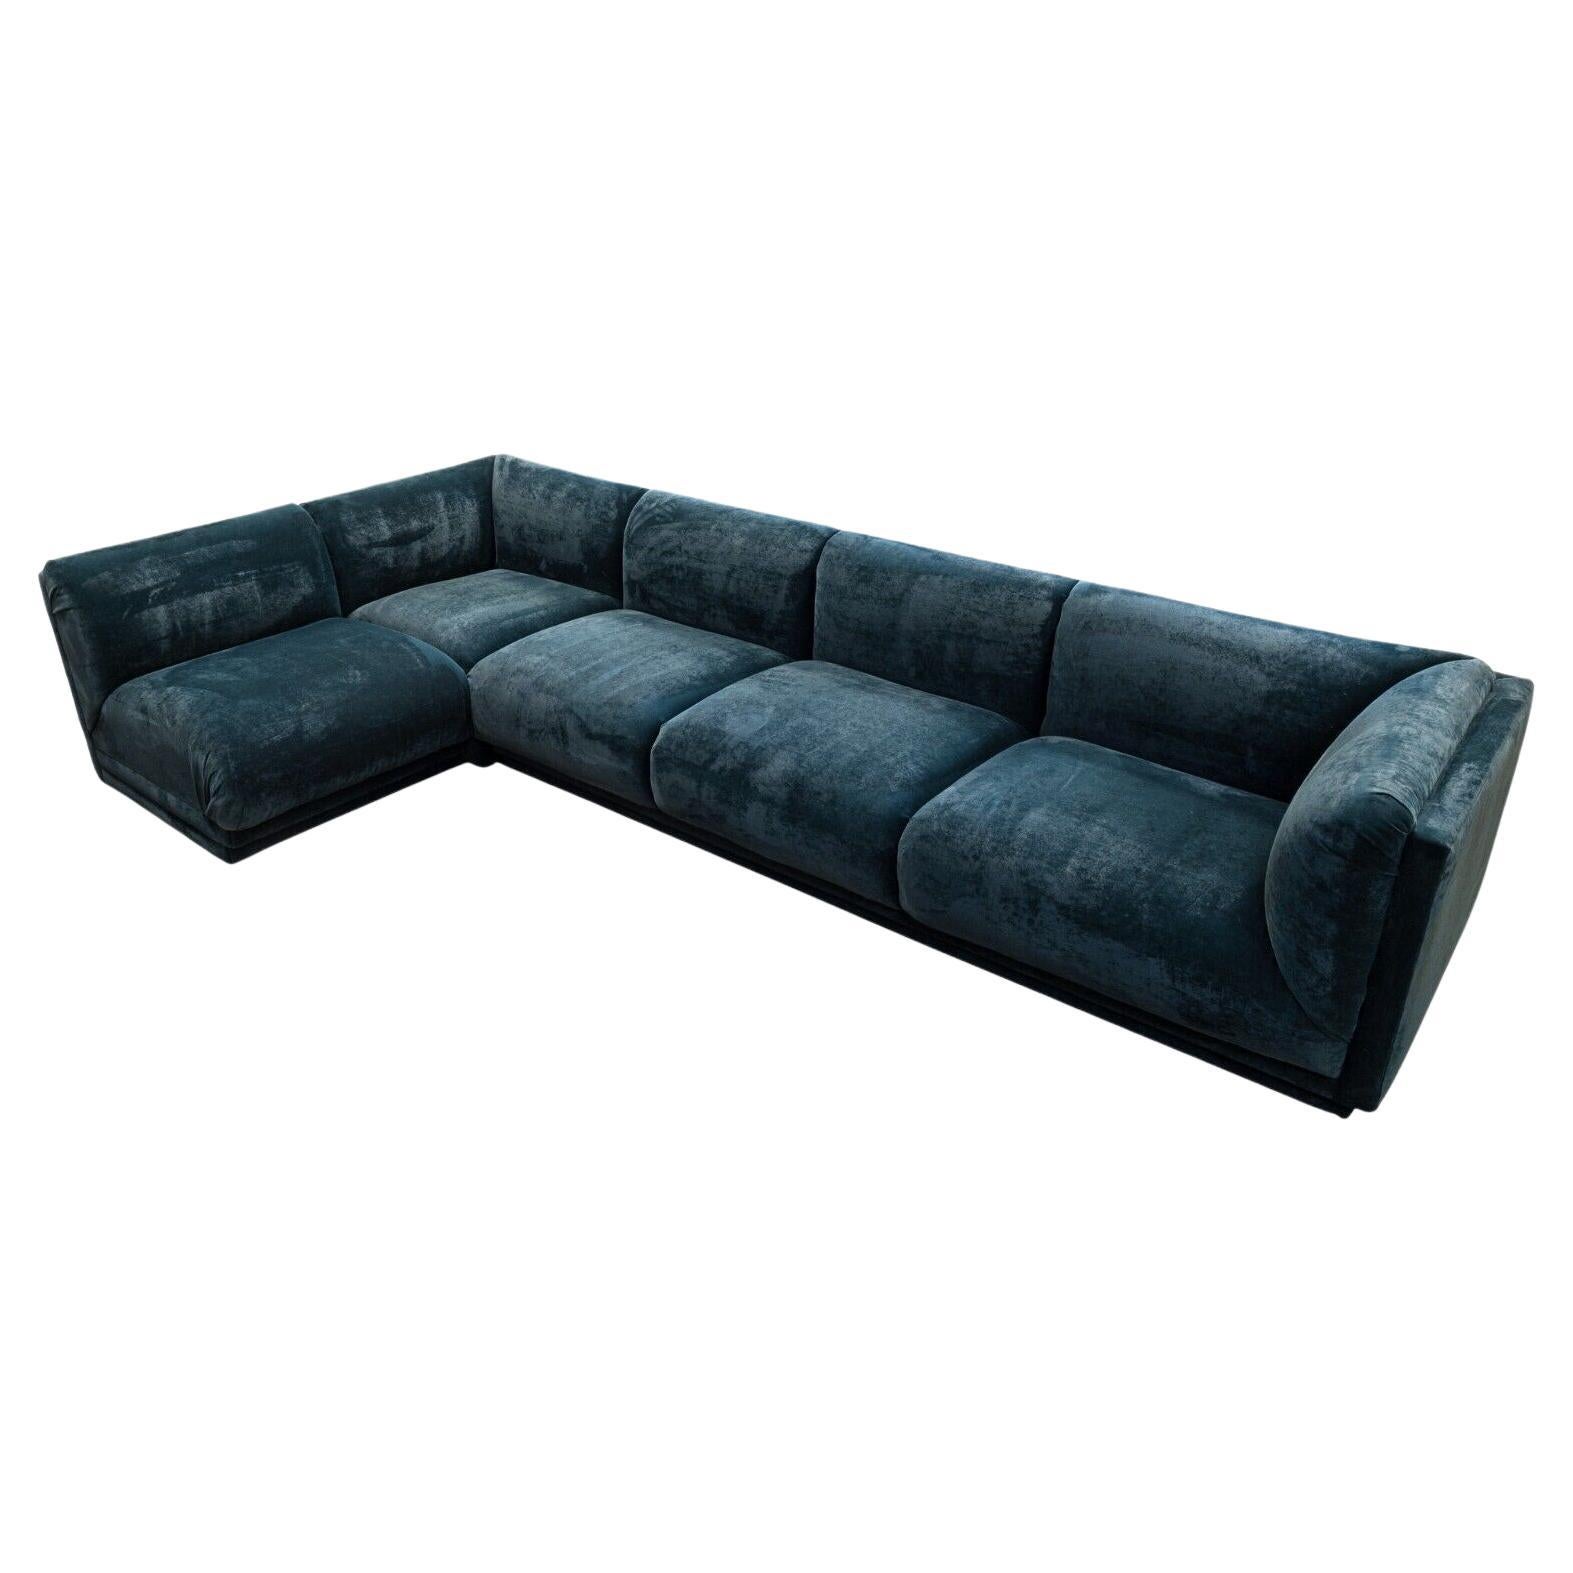 Mid-Century Modern Modular Blue Green Crushed Velvet Sofa 3 Piece Sectional